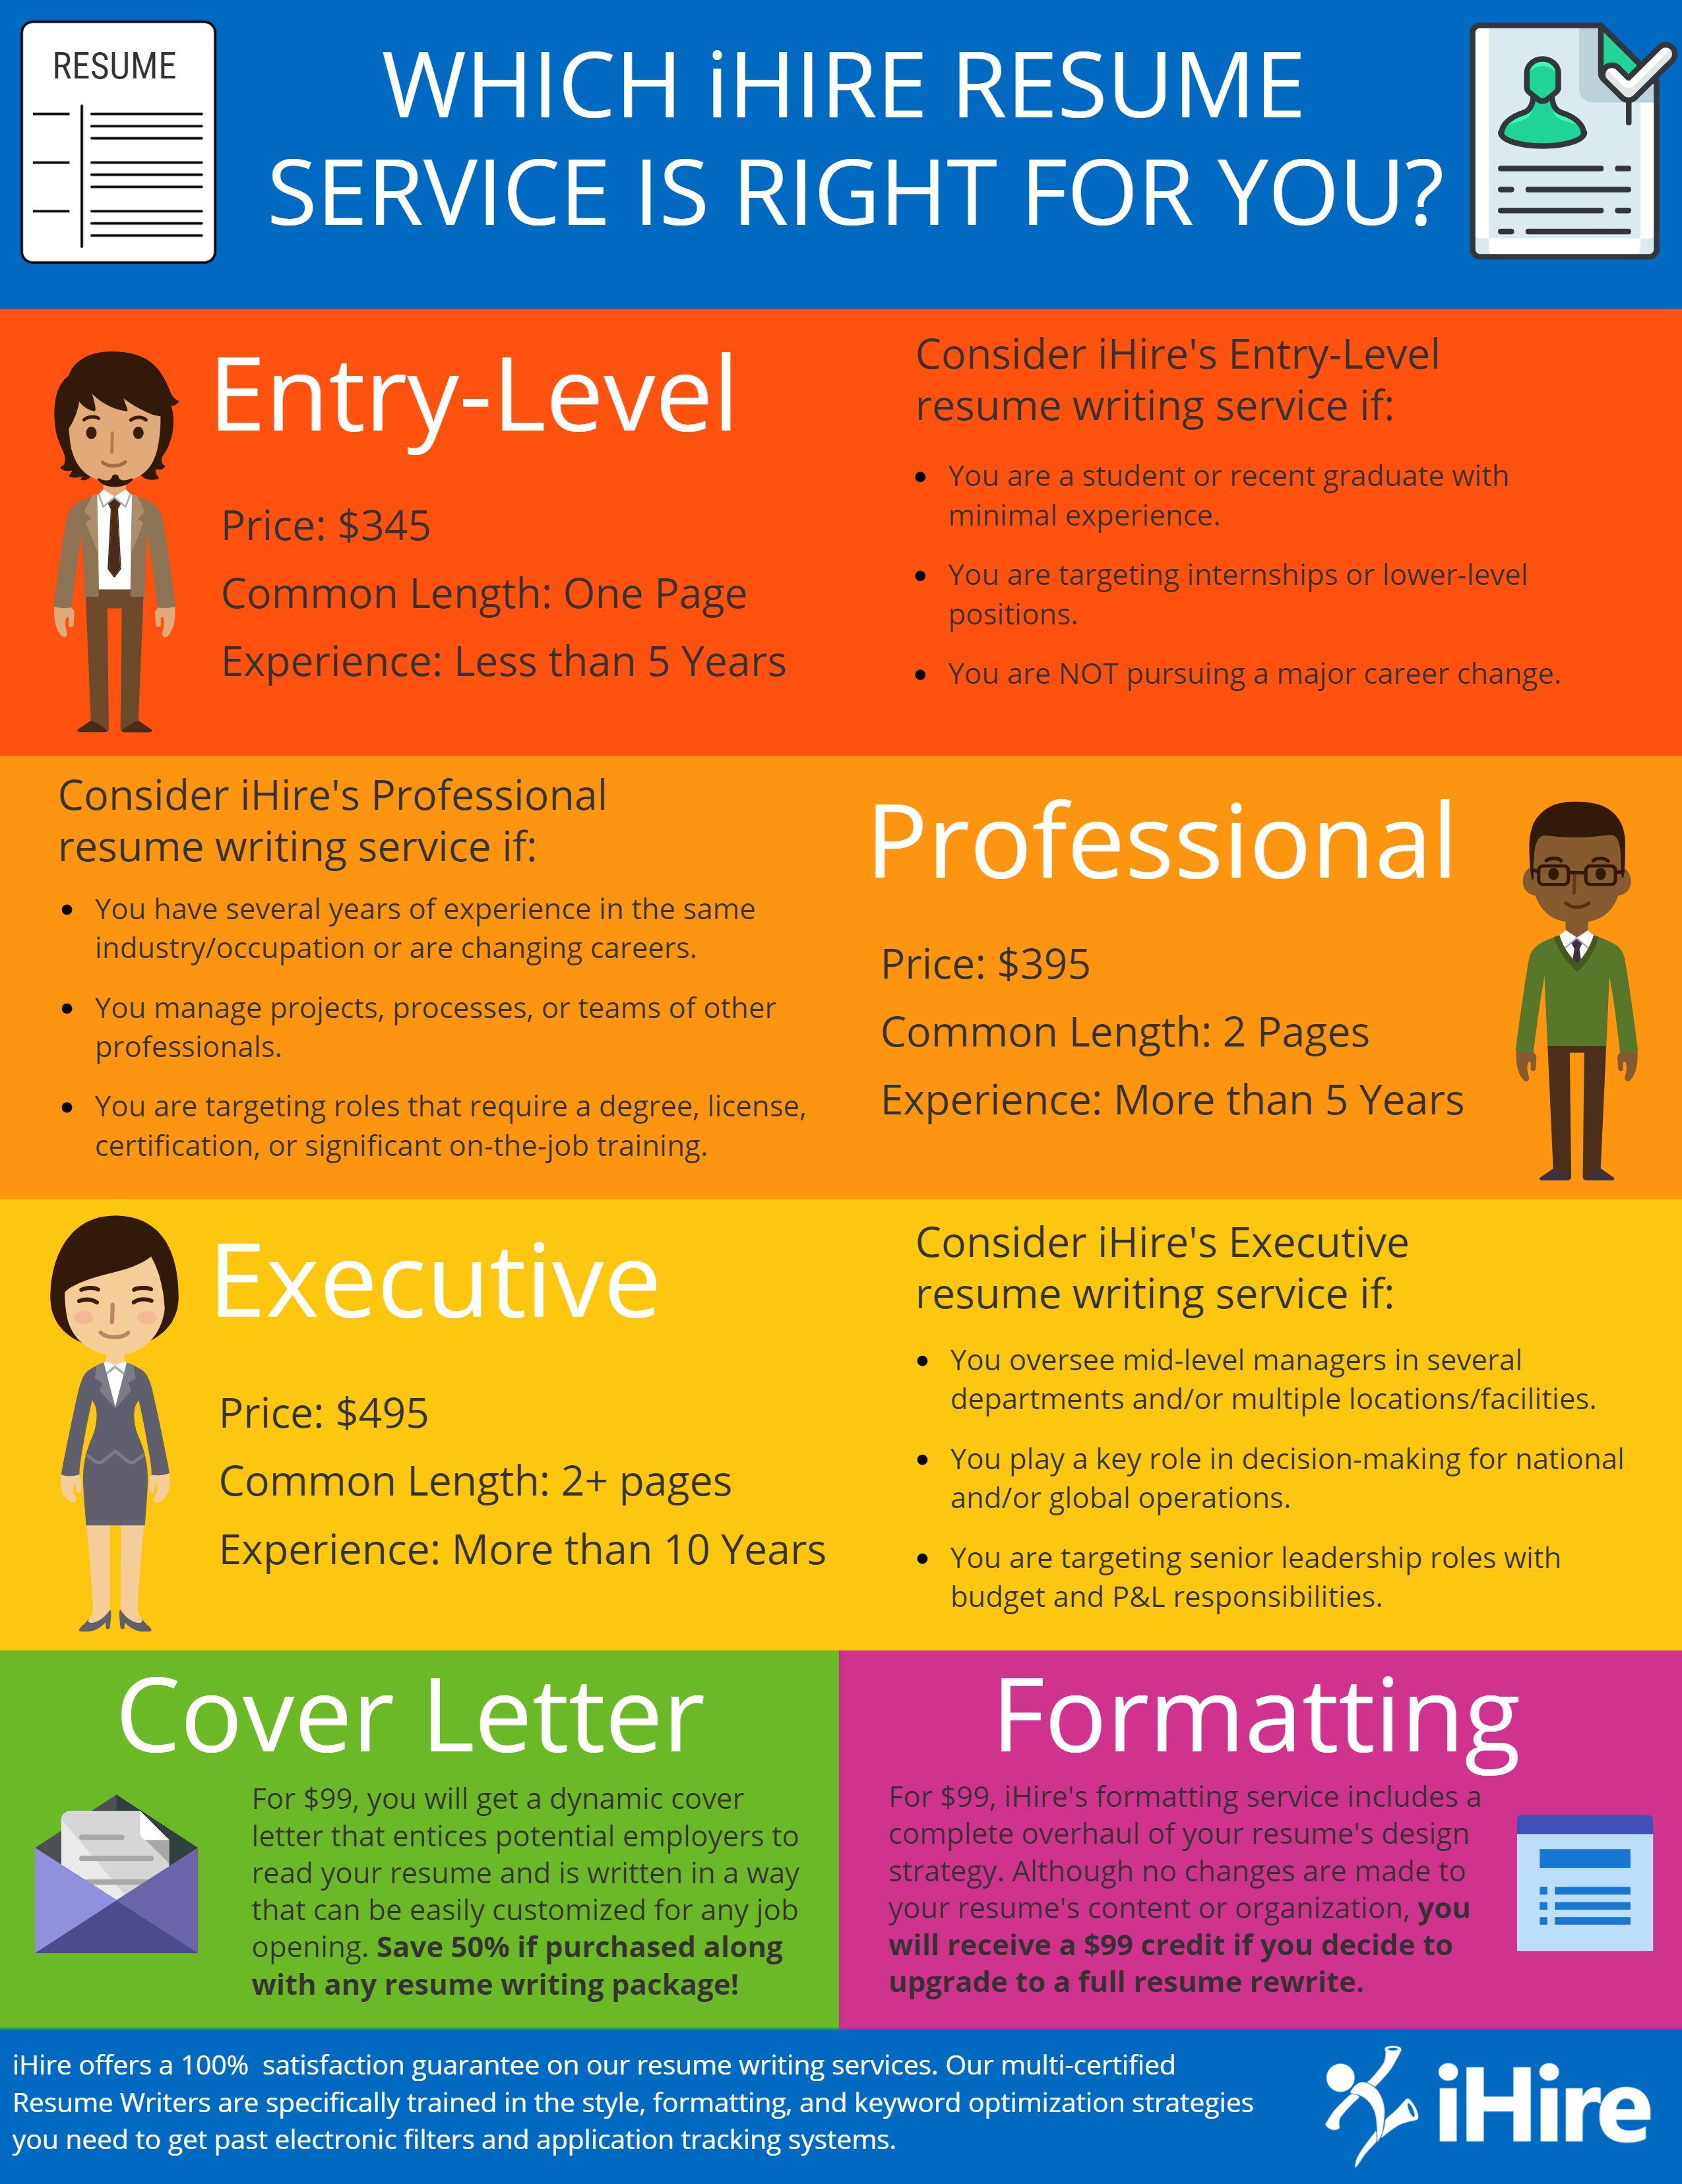 Resume writing services kalgoorlie